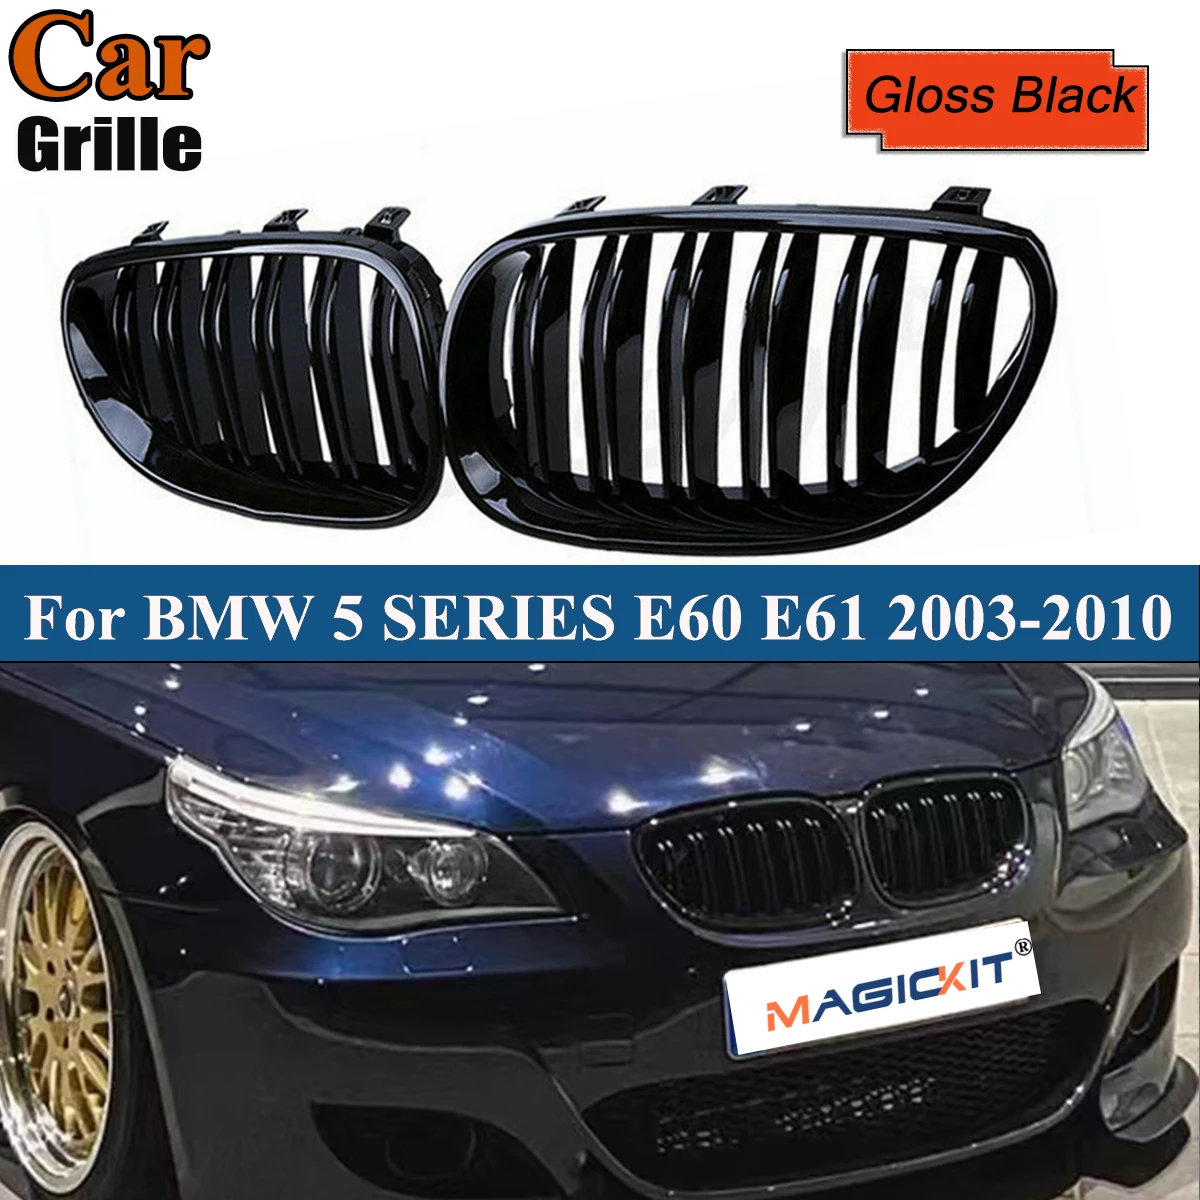 Gloss Black Car Front Bumper Kidney Grille For BMW E60 M5 E61 520i 545i 550i 535i 2003-2010 5 Series  Double Slat Auto Styling